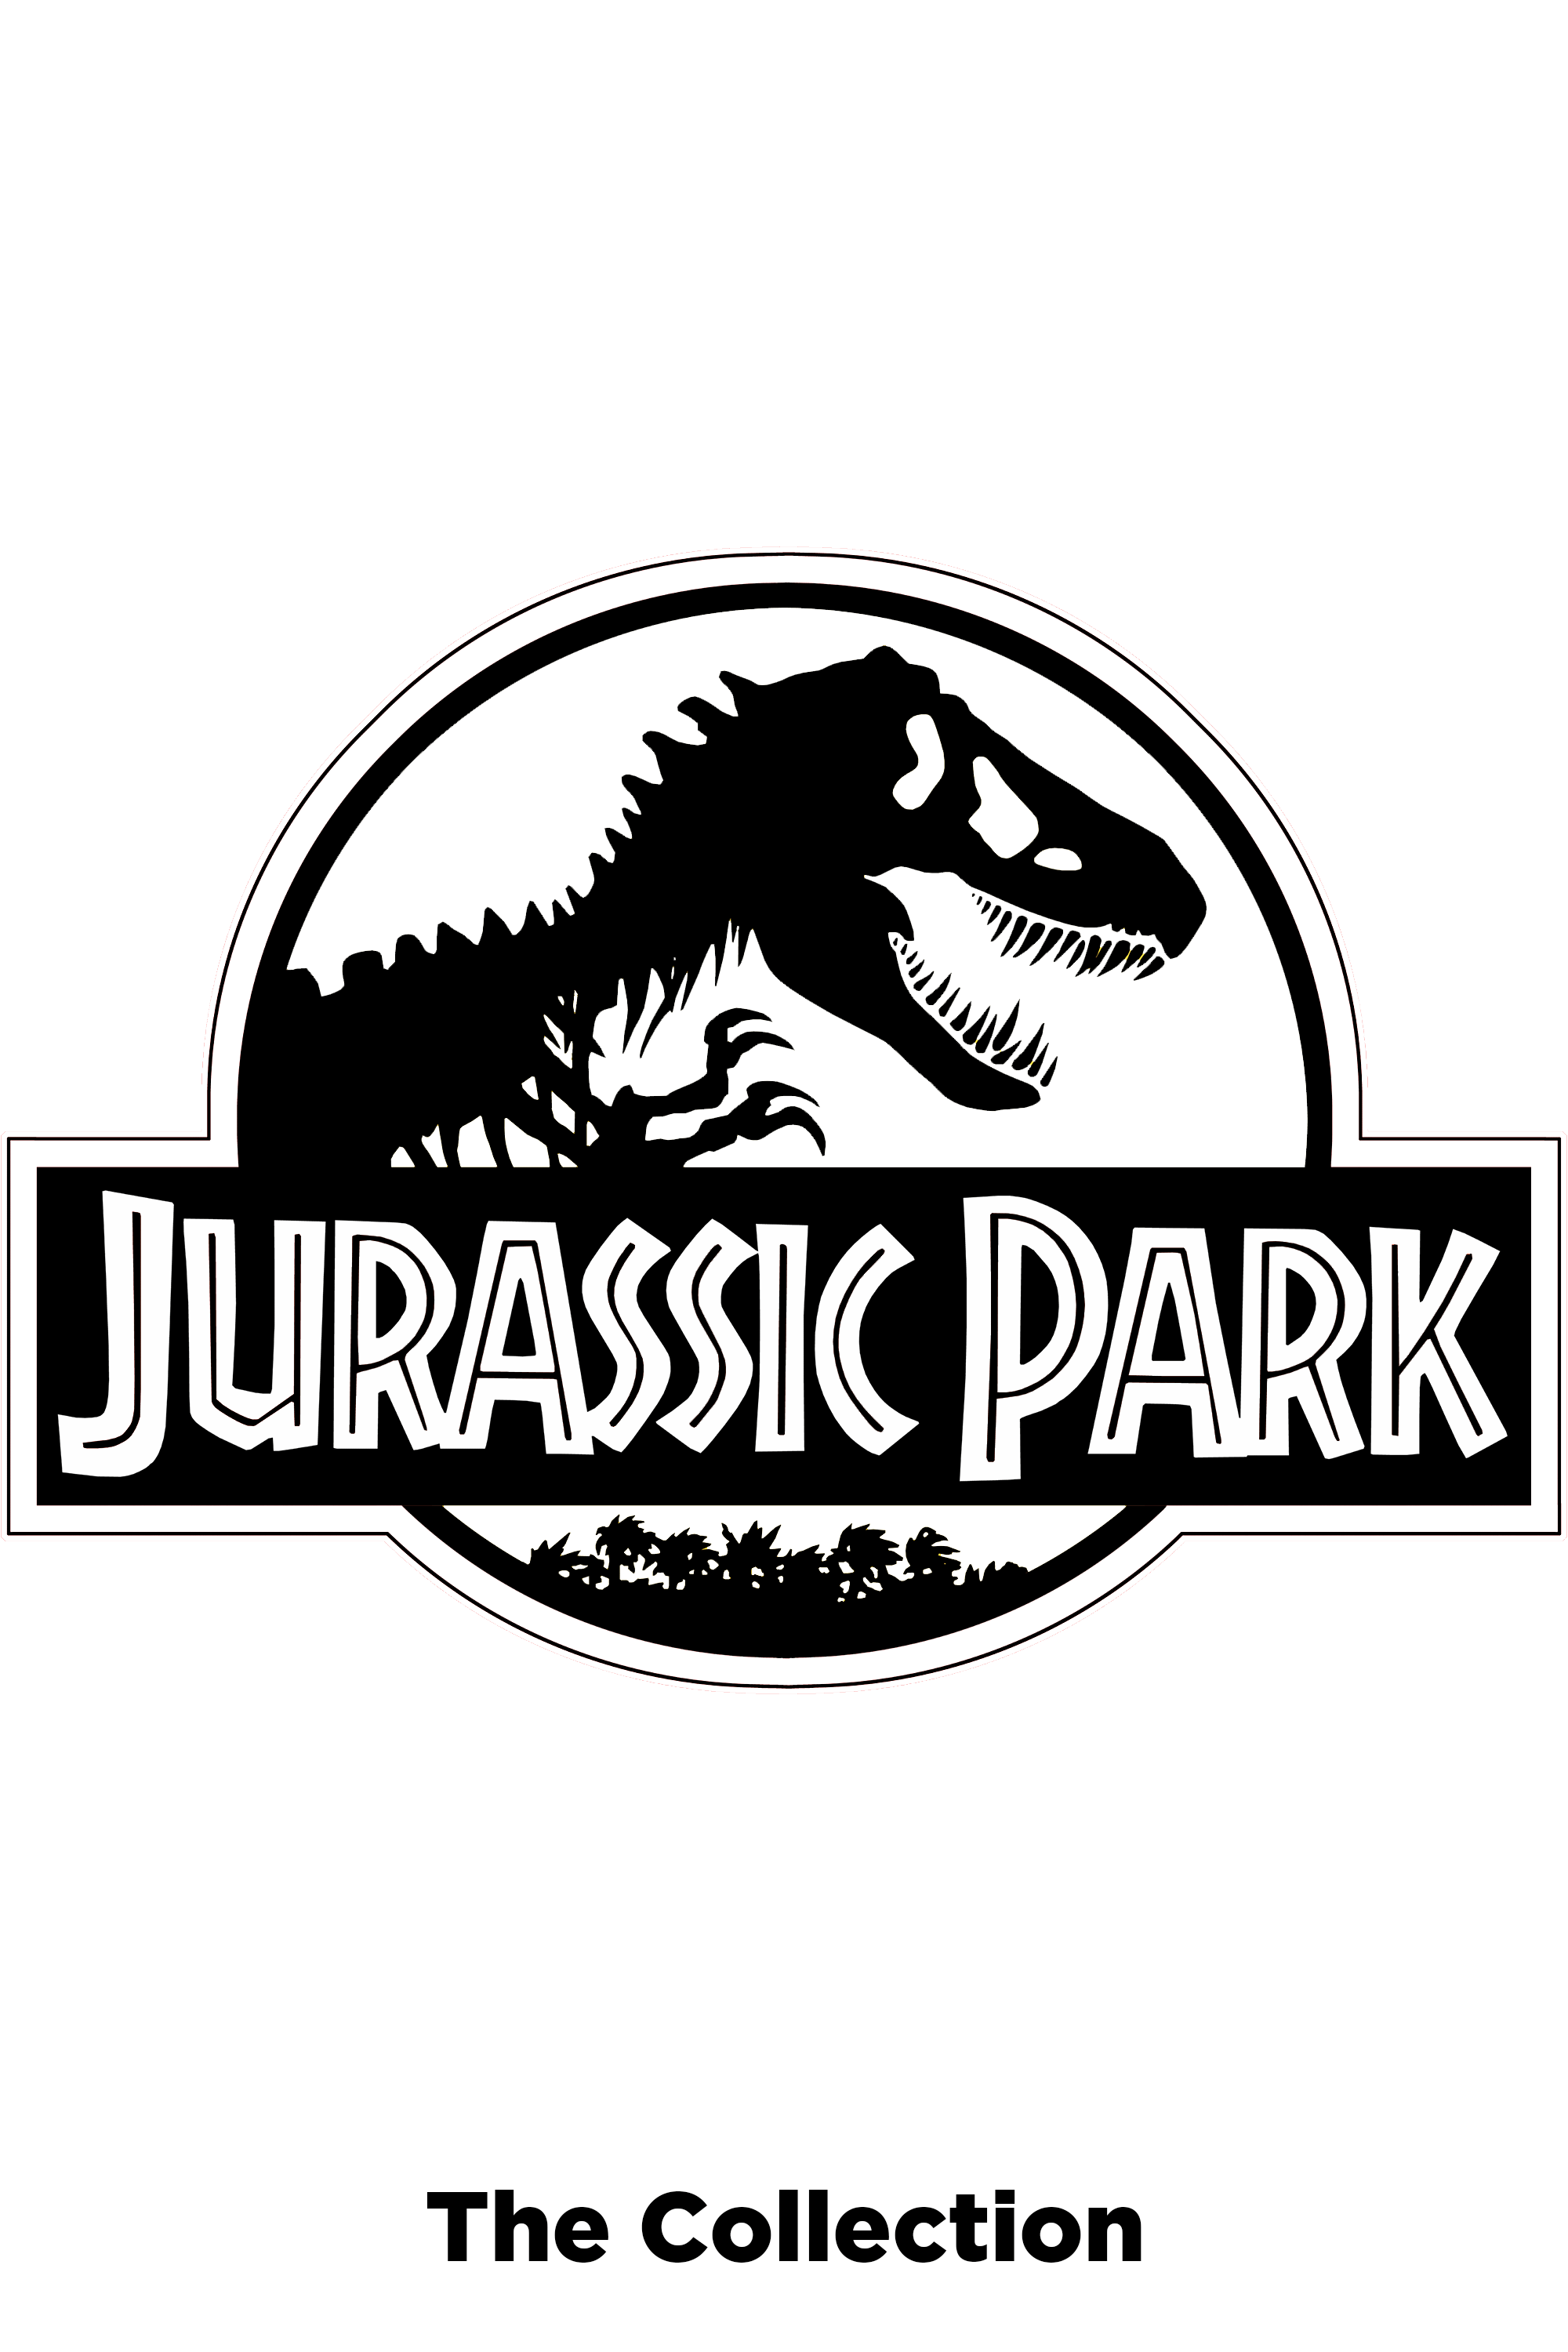 Jurassic Park Black and White Logo - Jurassic Park - Plex Collection Posters